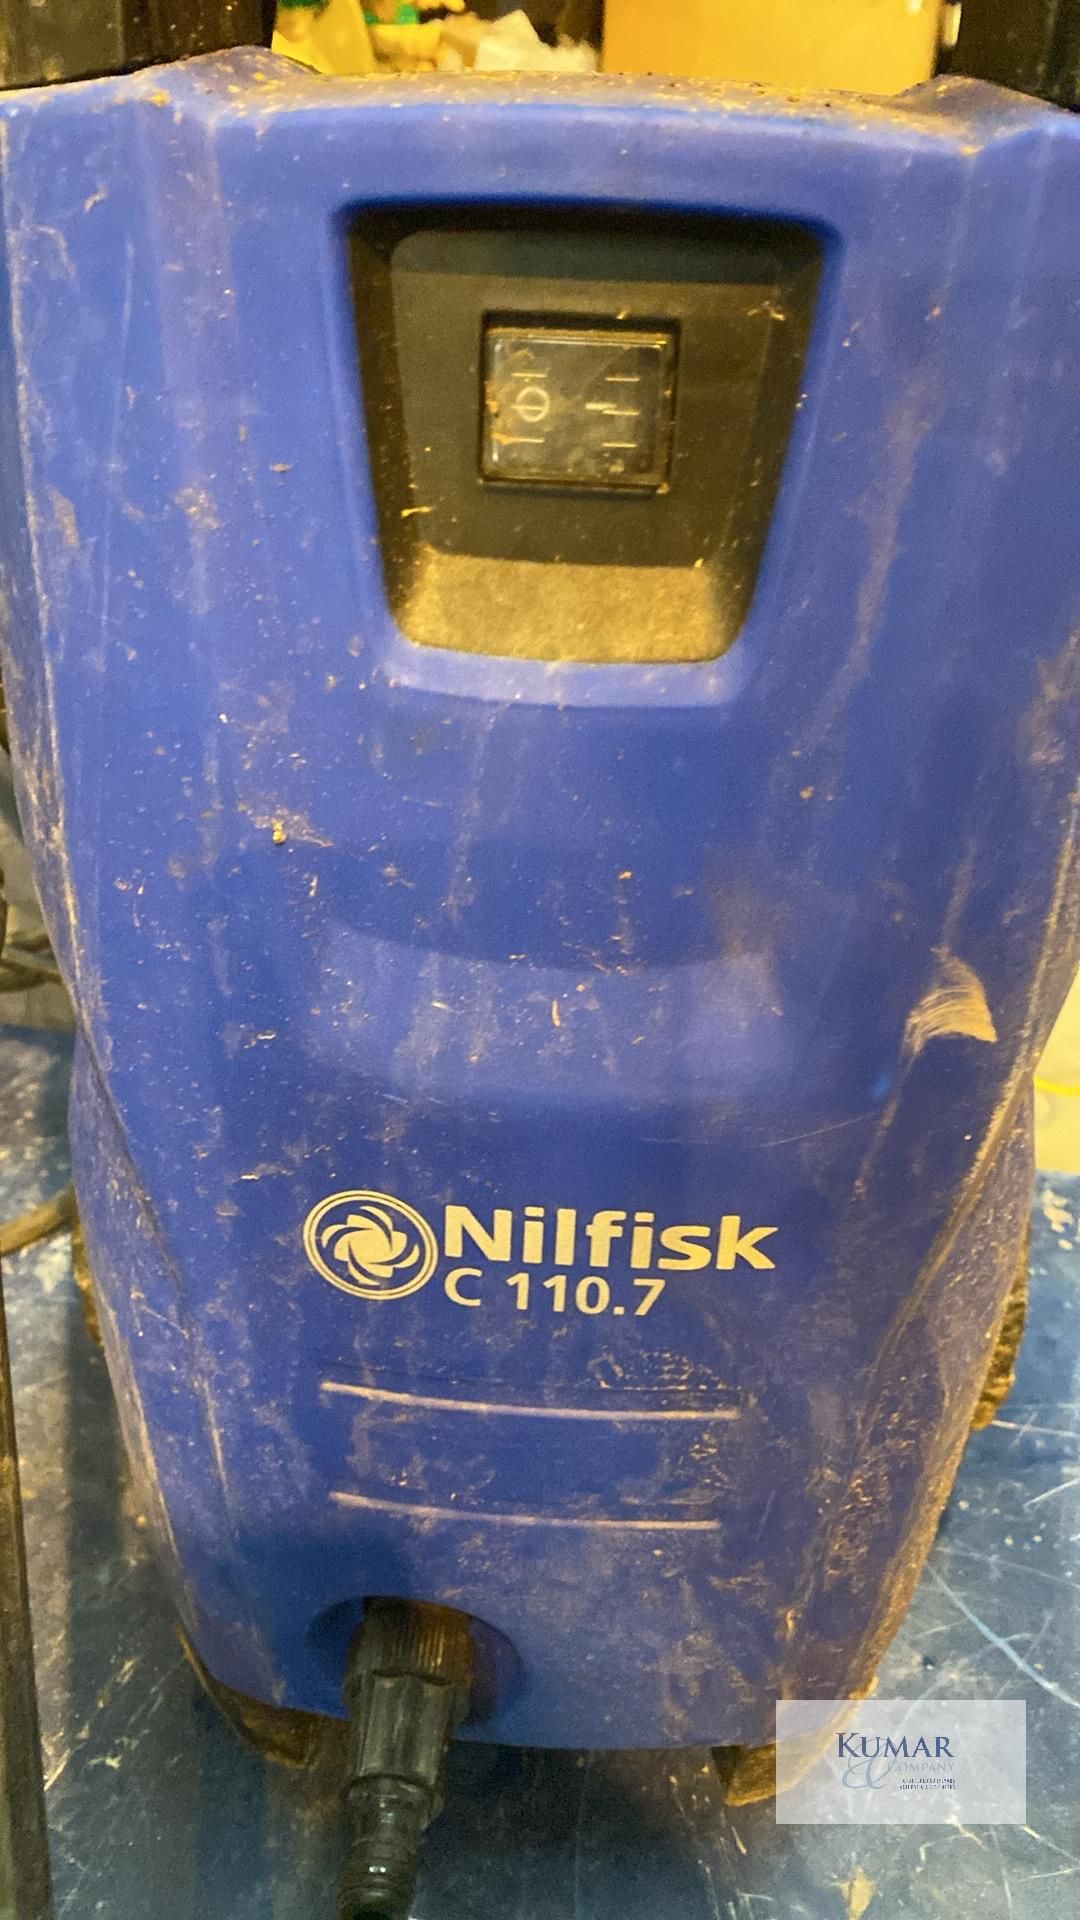 Nilfisk C120.7 power washer - Image 3 of 7